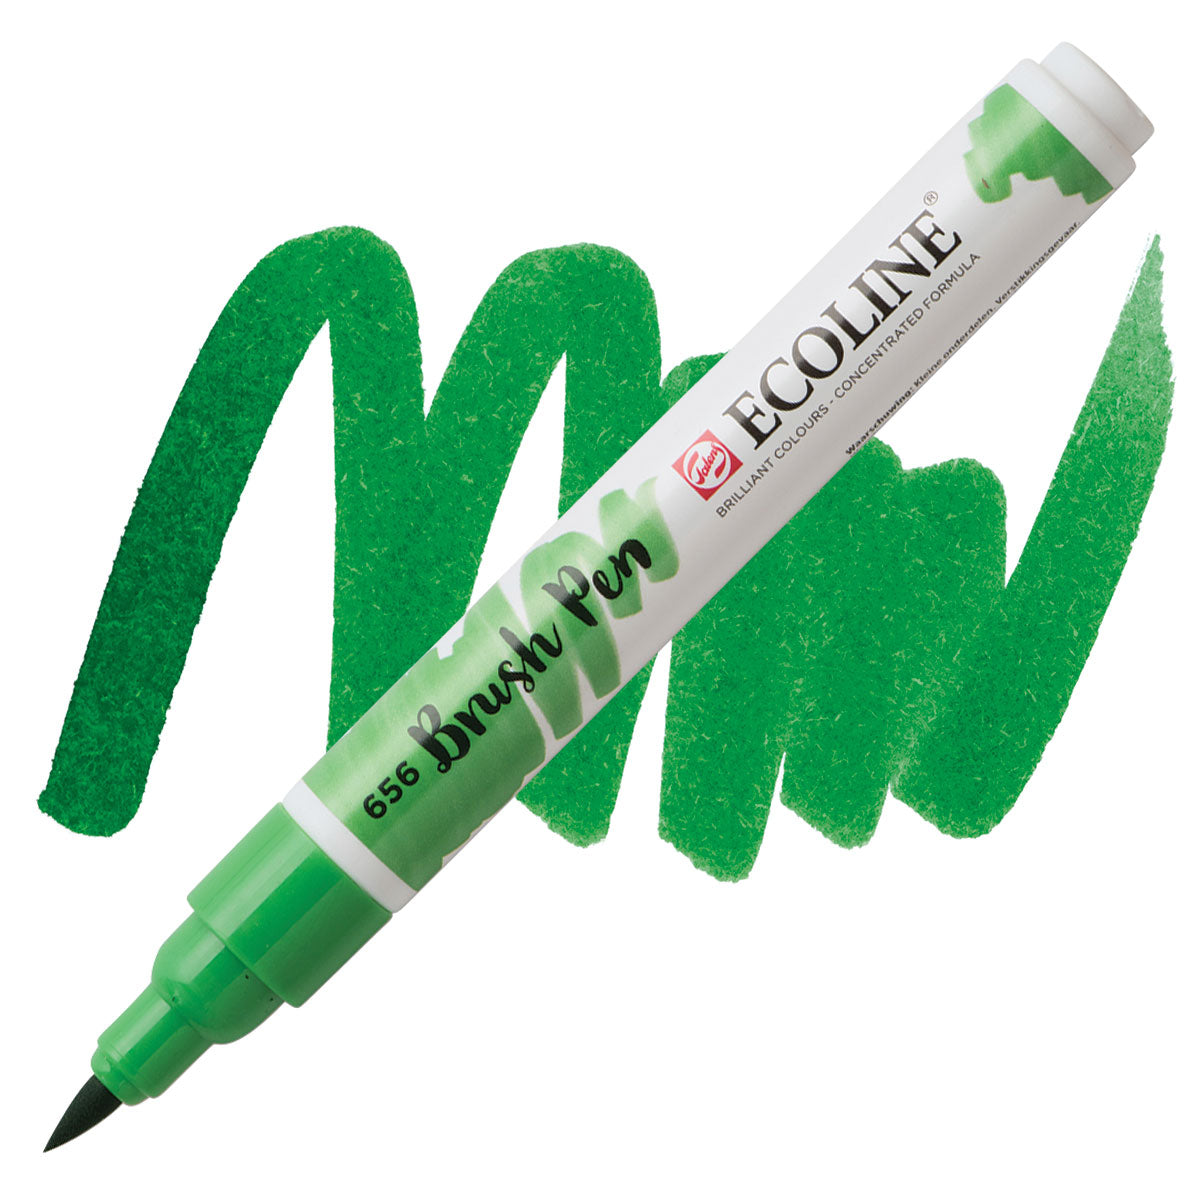 Talens Ecoline Brush Pen Set of 10 Illustrator